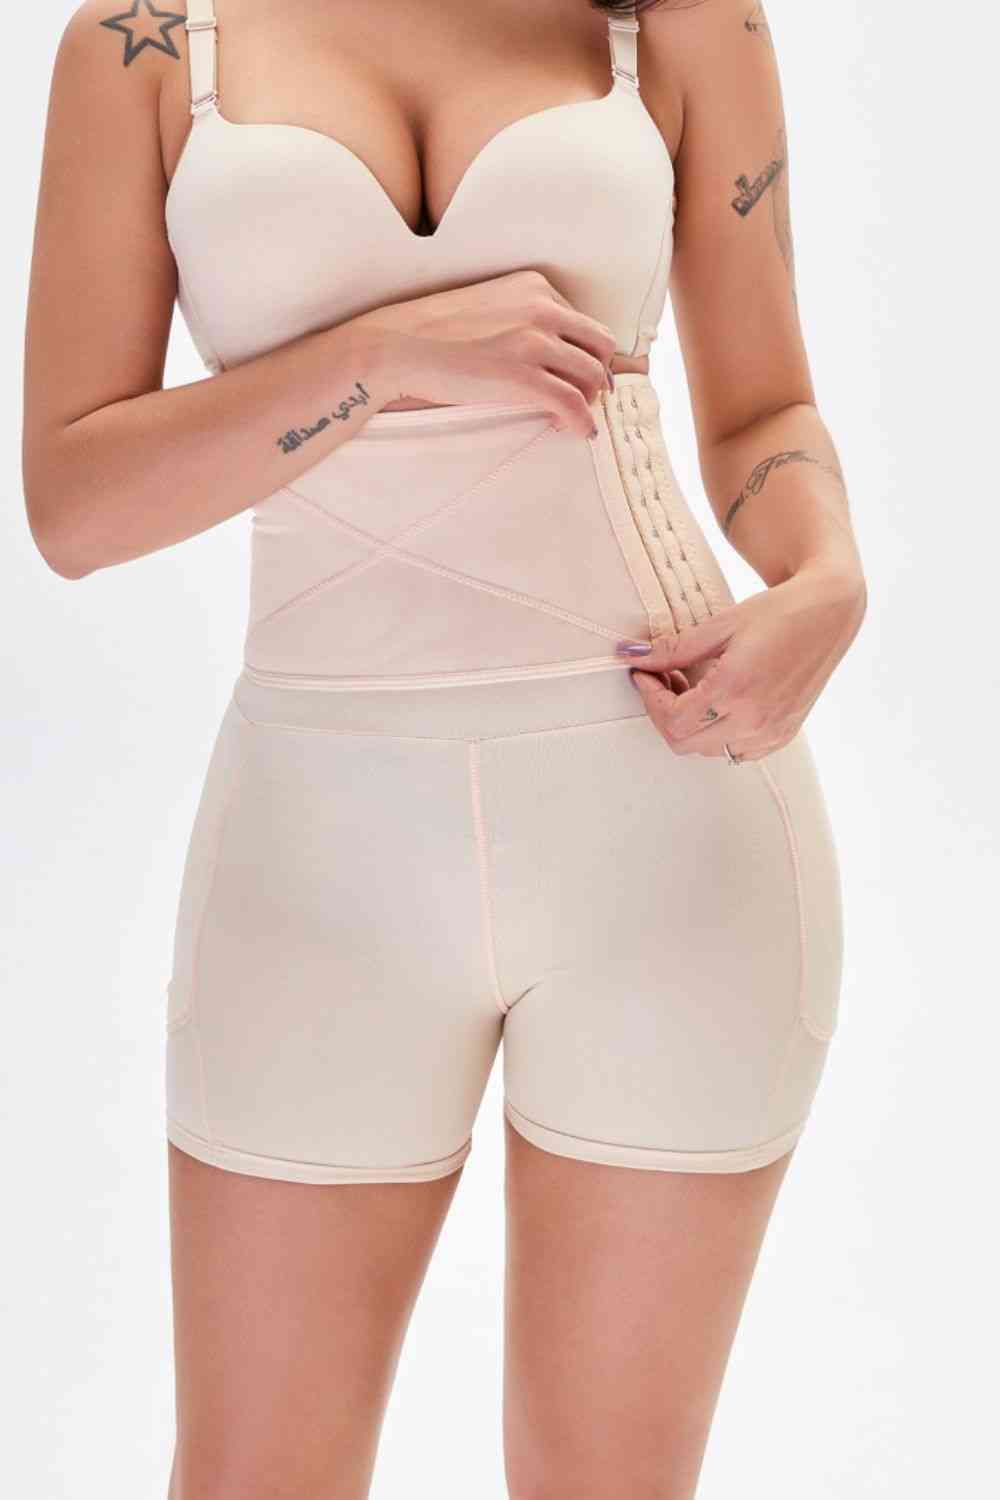 Full Size Hip Lifting Shaping Shorts - TRENDMELO